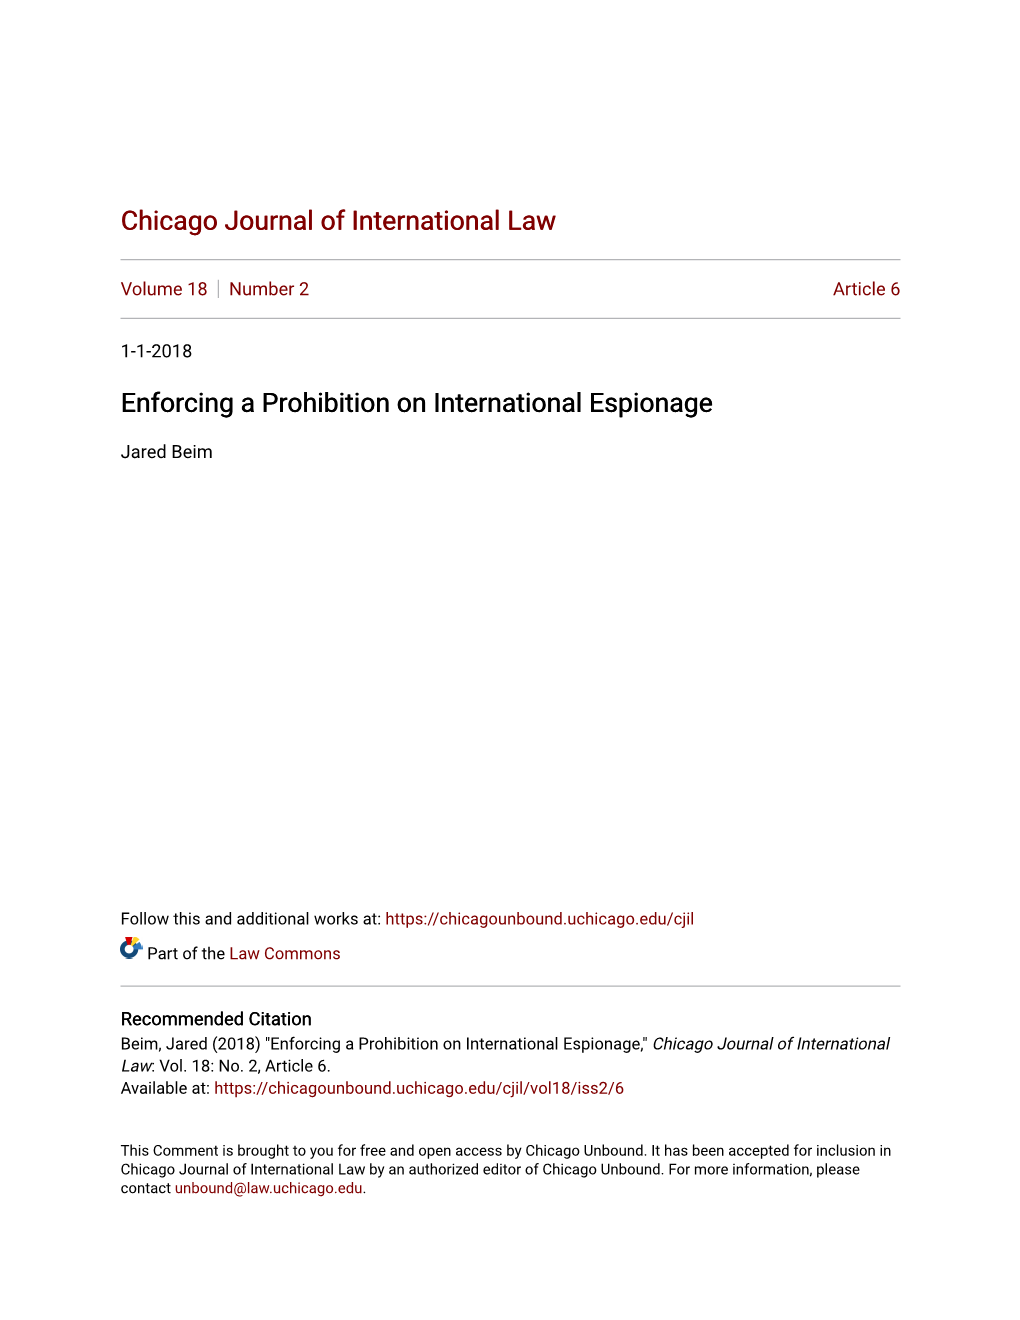 Enforcing a Prohibition on International Espionage